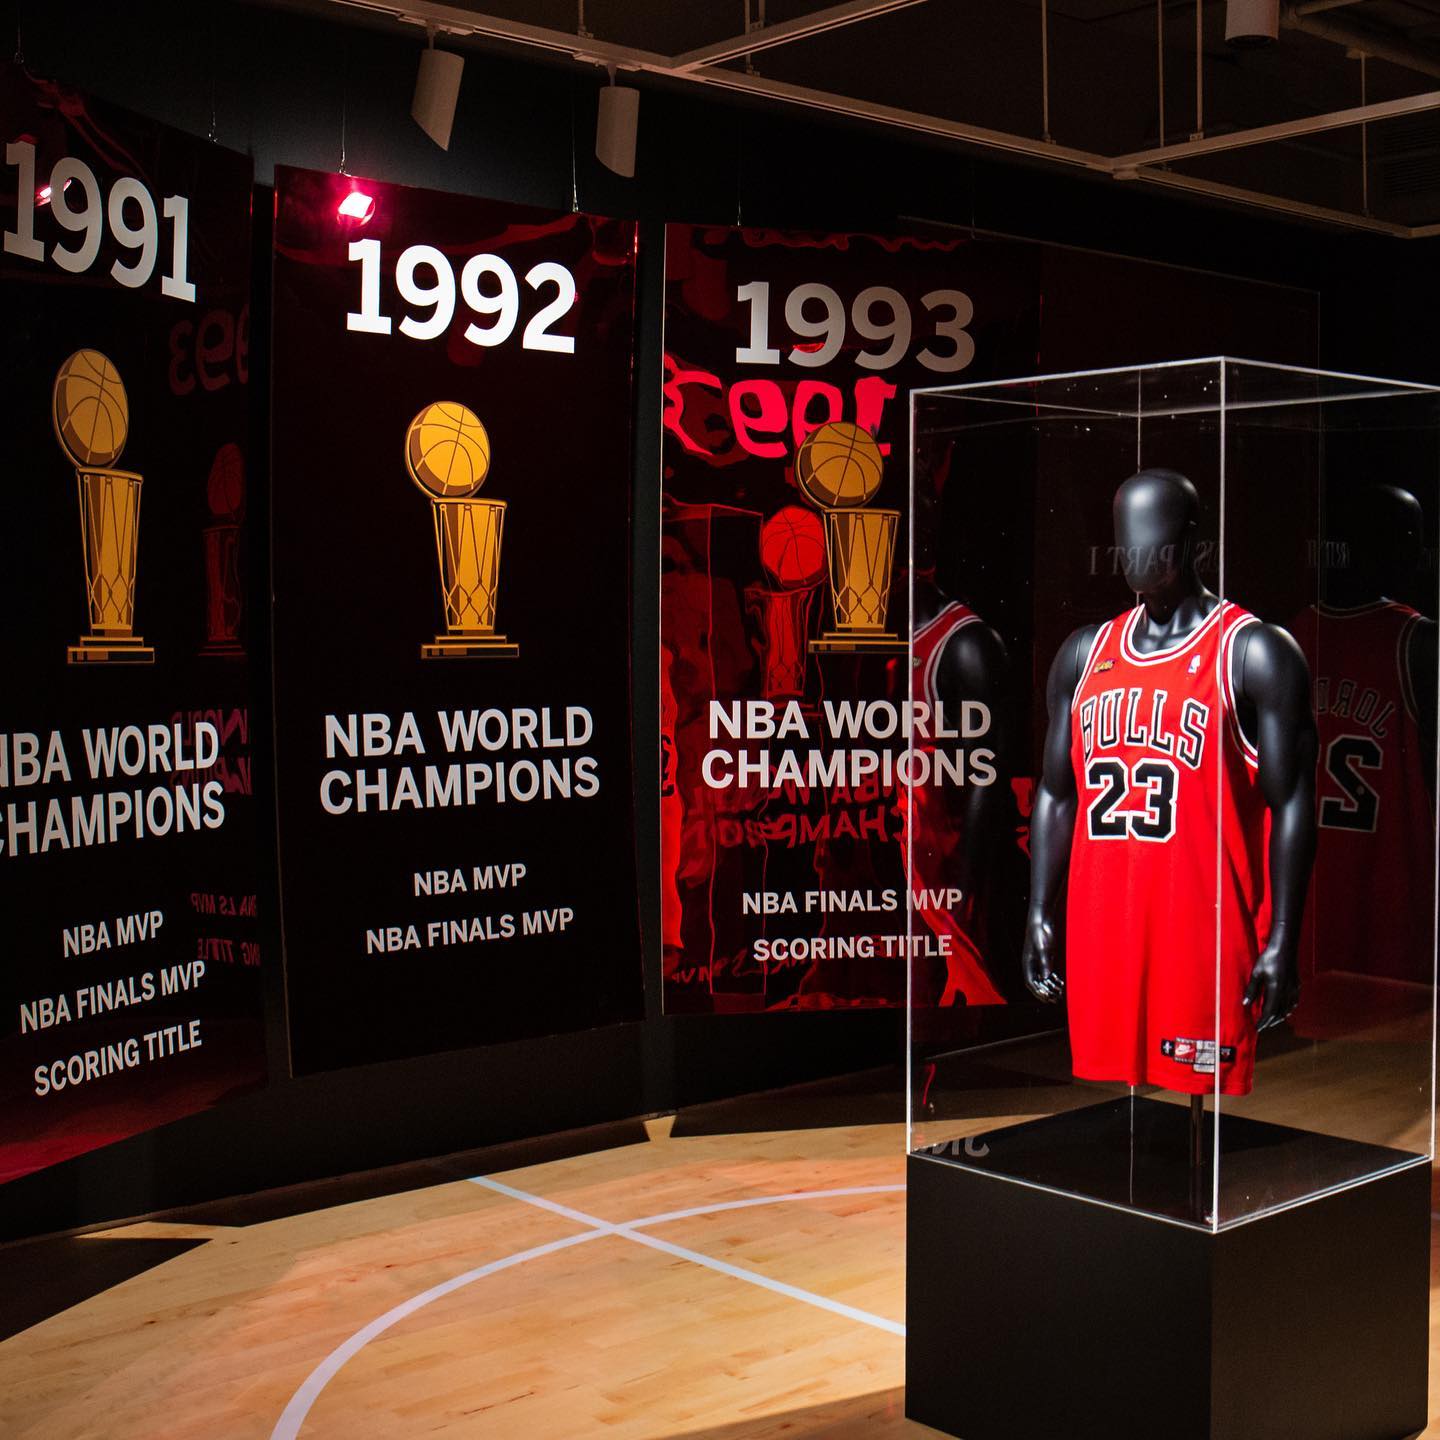 Michael Jordan 'Last Dance' jersey sells for a record $10.1